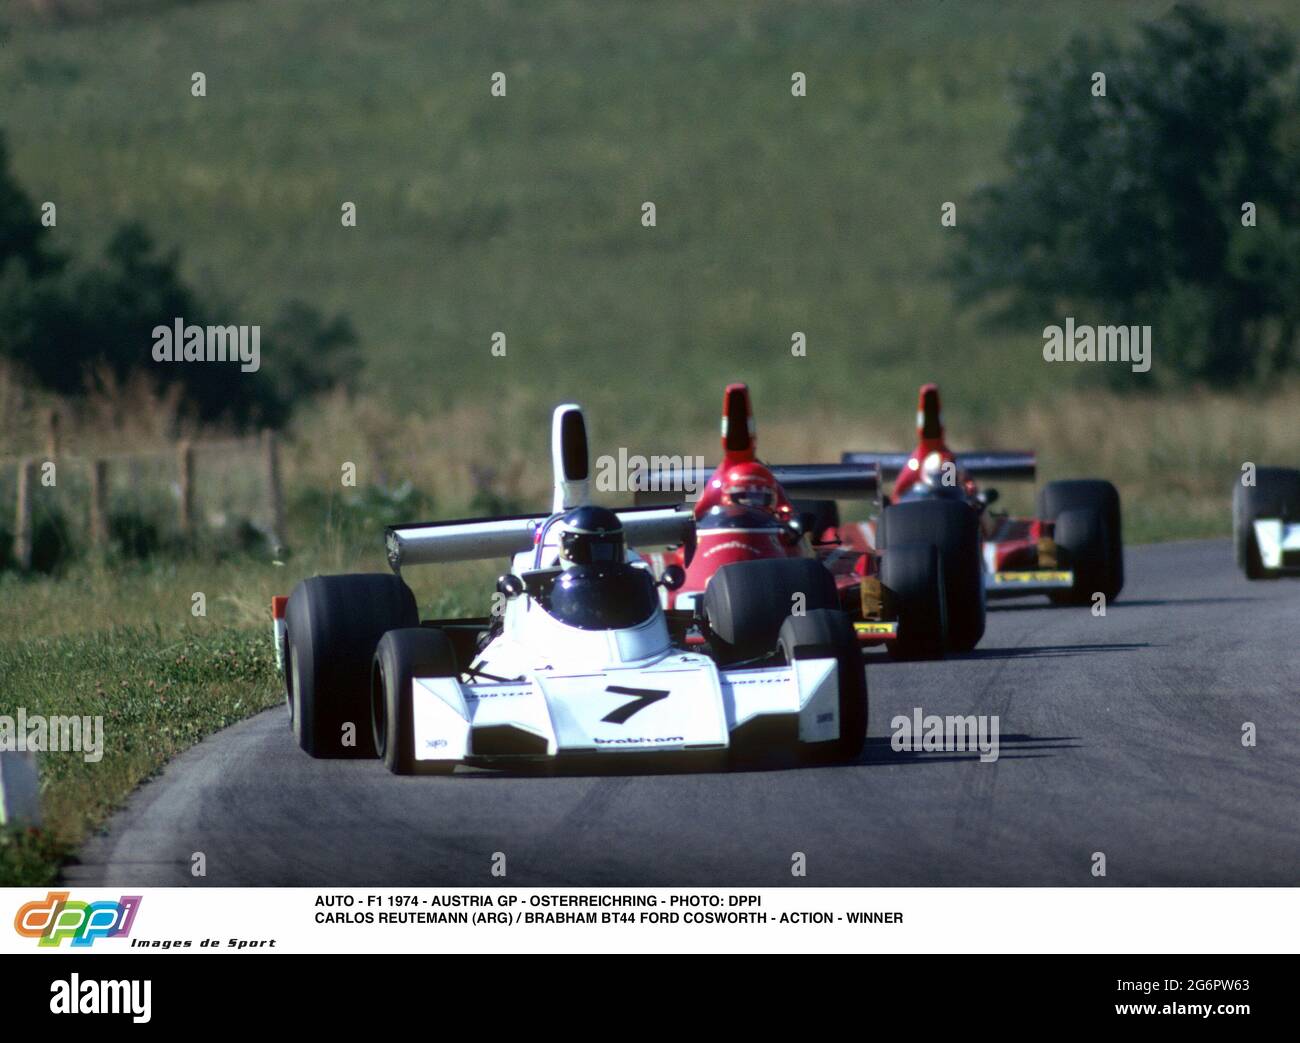 AUTO - F1 1974 - AUSTRIA GP - OSTERREICHRING - PHOTO: DPPI CARLOS REUTEMANN (ARG) / BRABHAM BT44 FORD COSWORTH - ACTION - WINNER Stock Photo